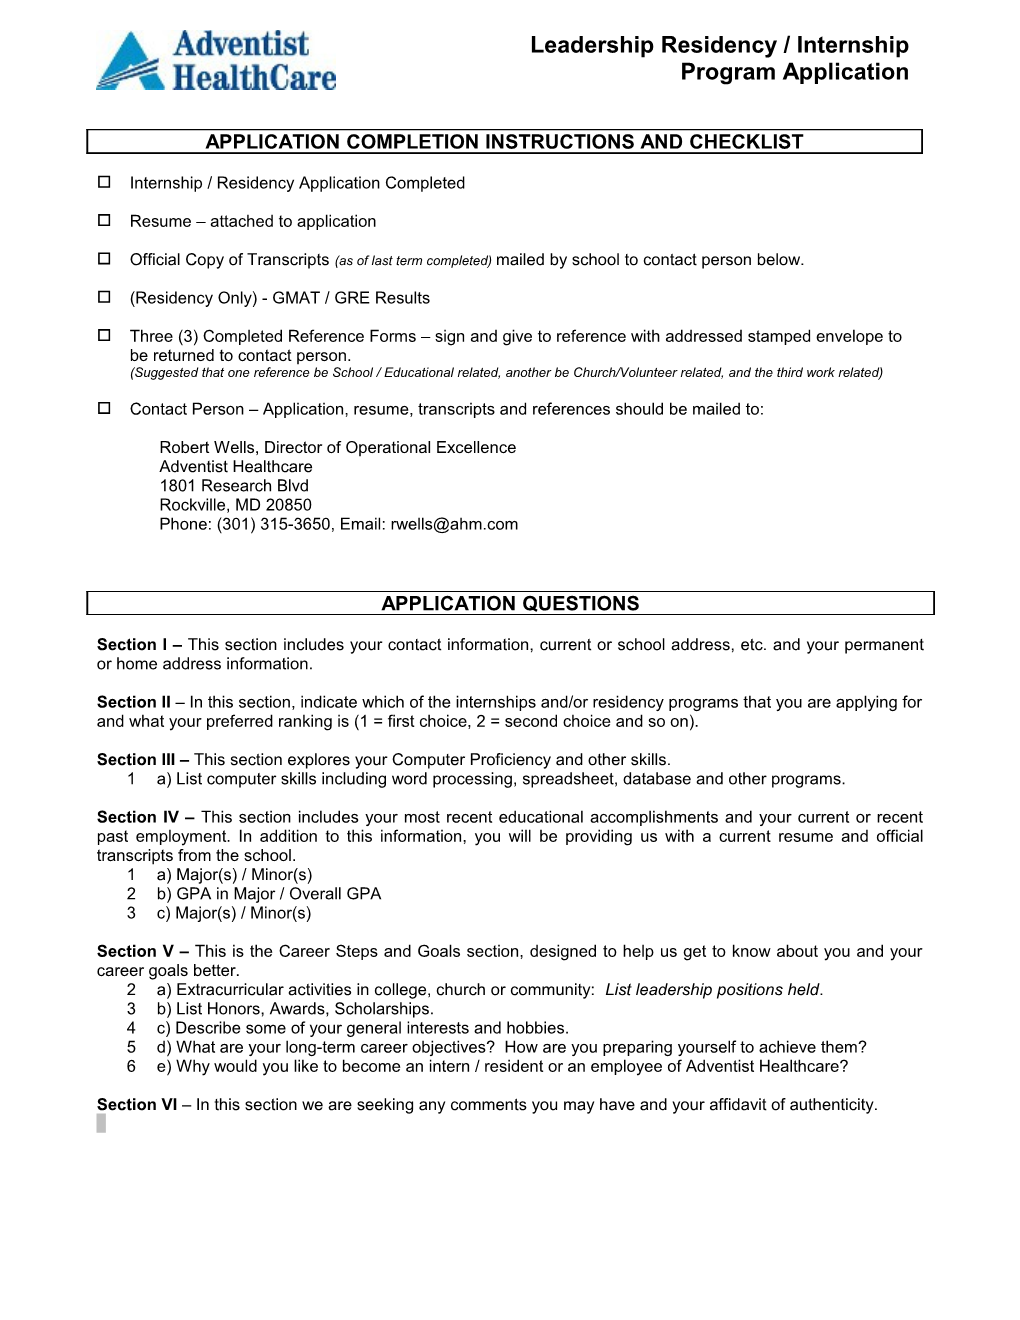 Adventist Health Care Leadership Residency / Internship Program Application